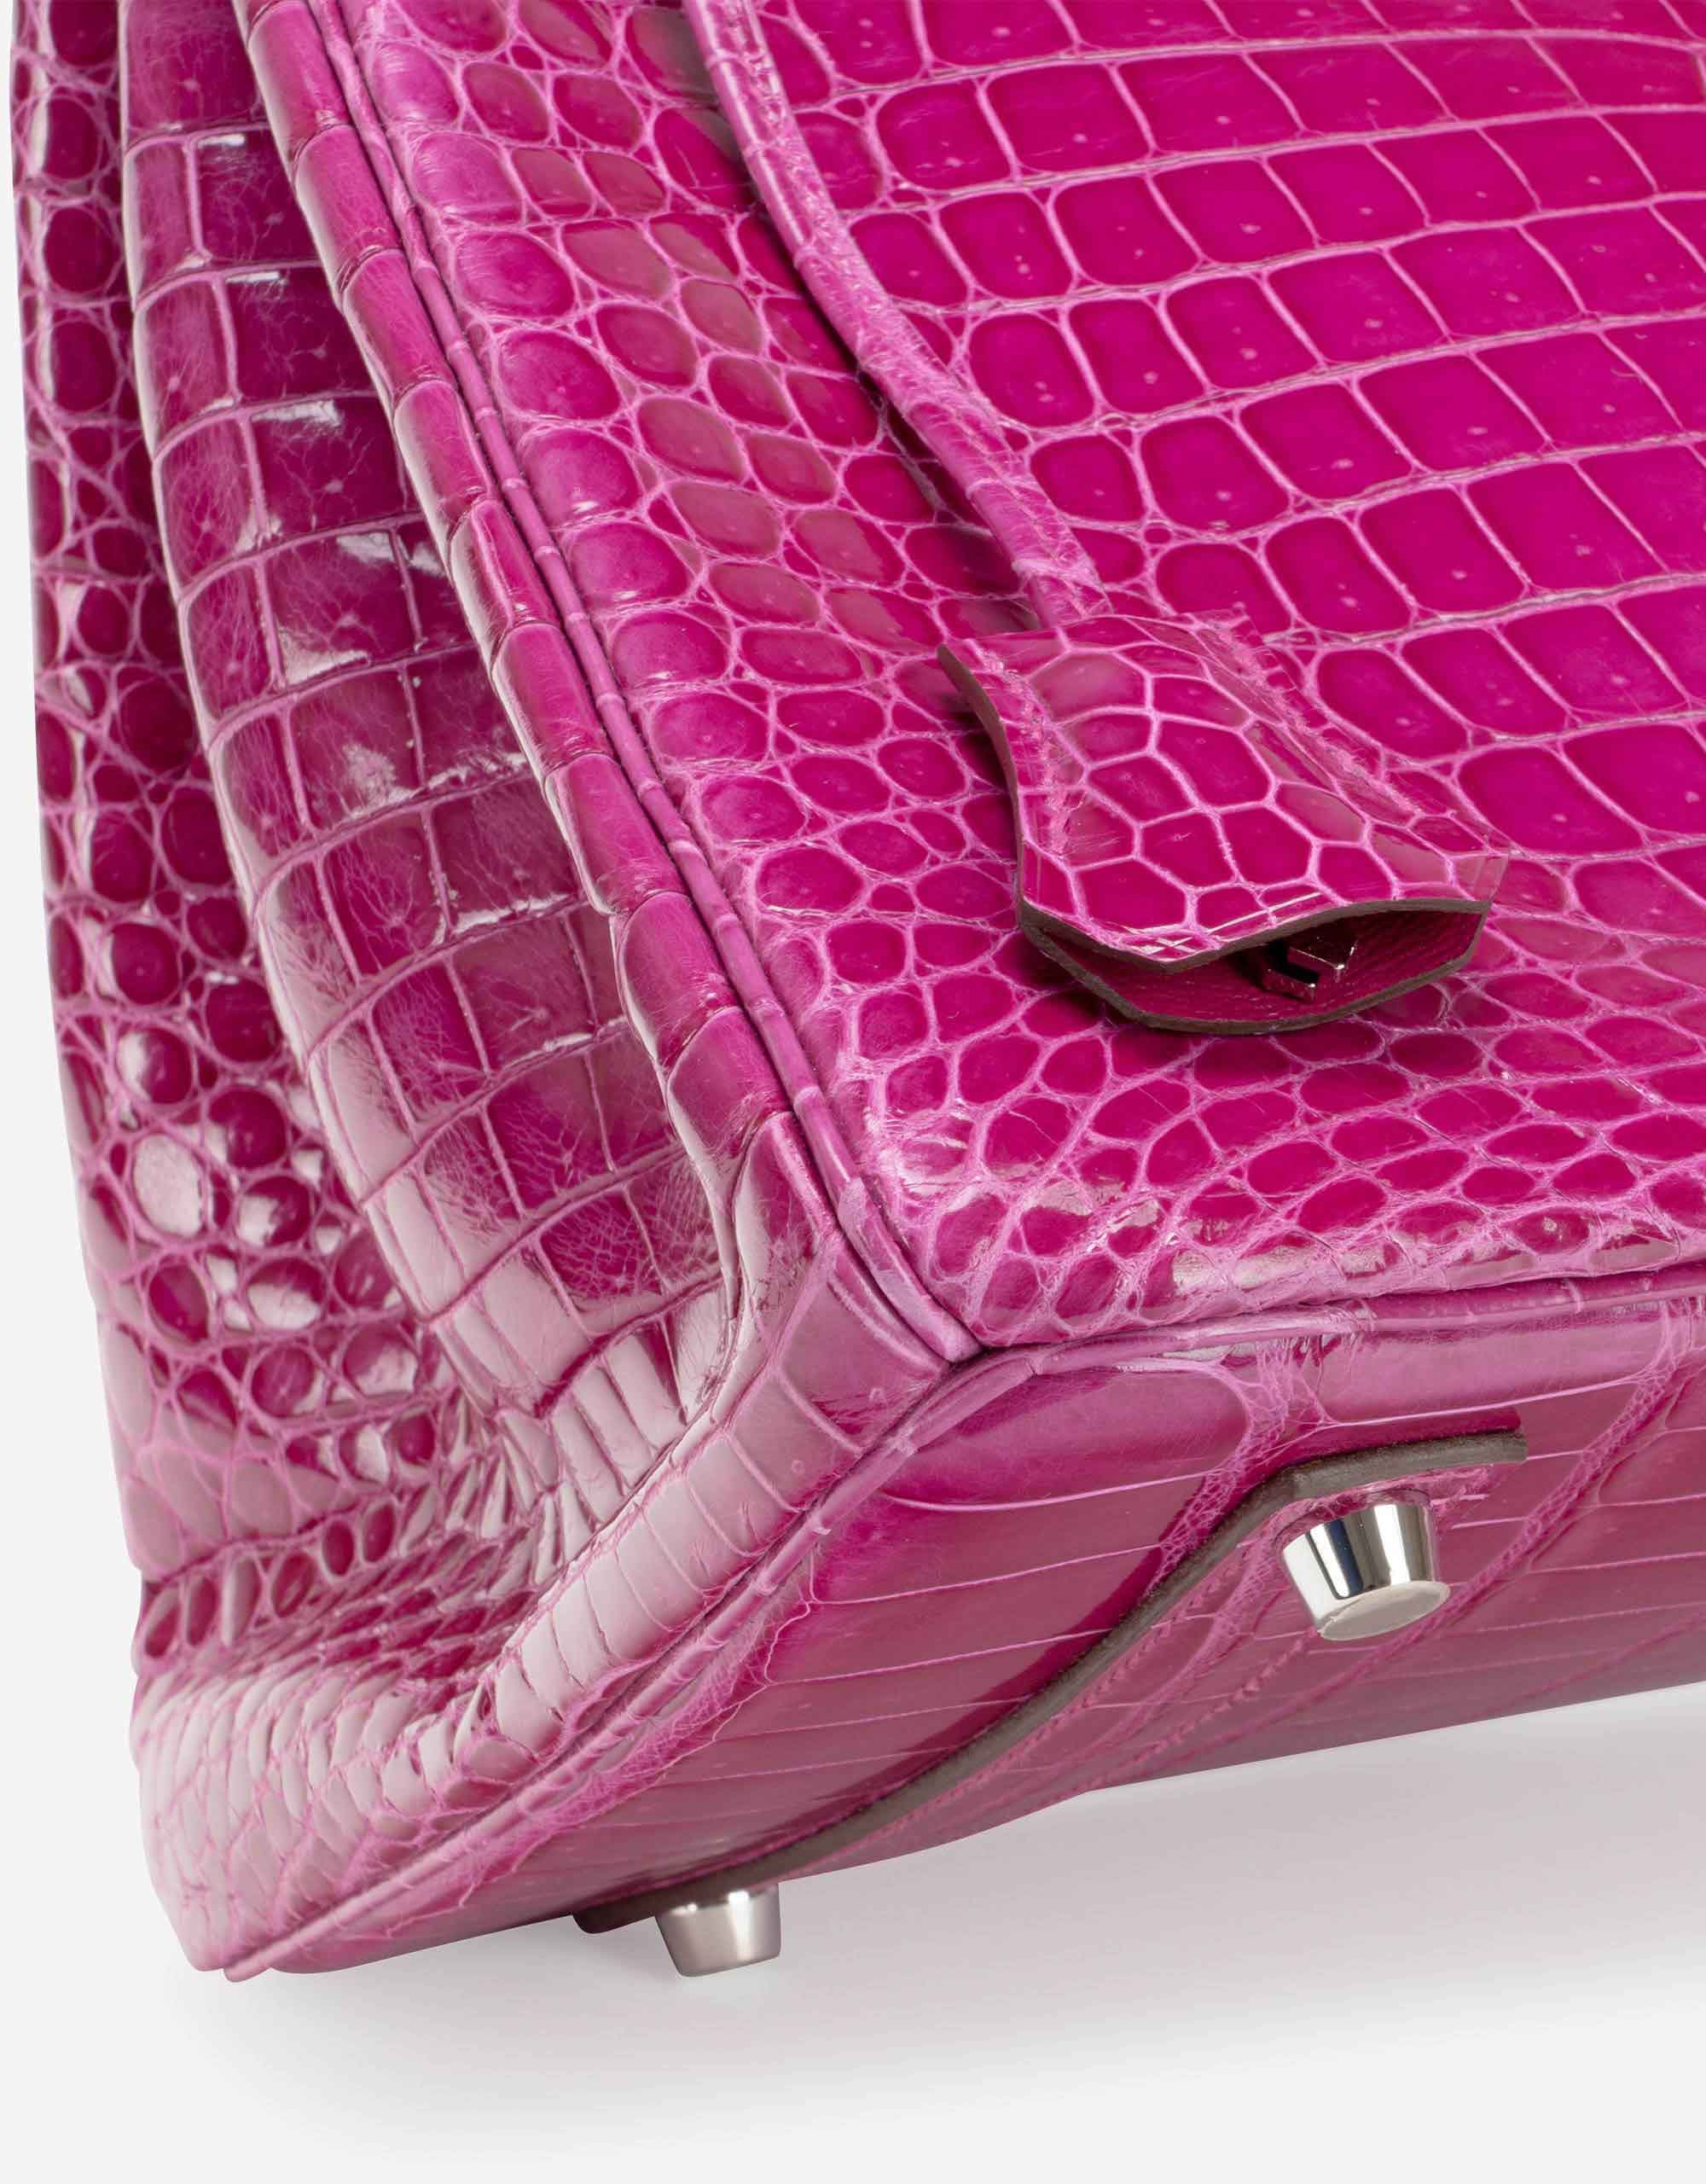 Hermes Birkin 35 Bag Pink Rose Scheherazade Porosus Crocodile Gold